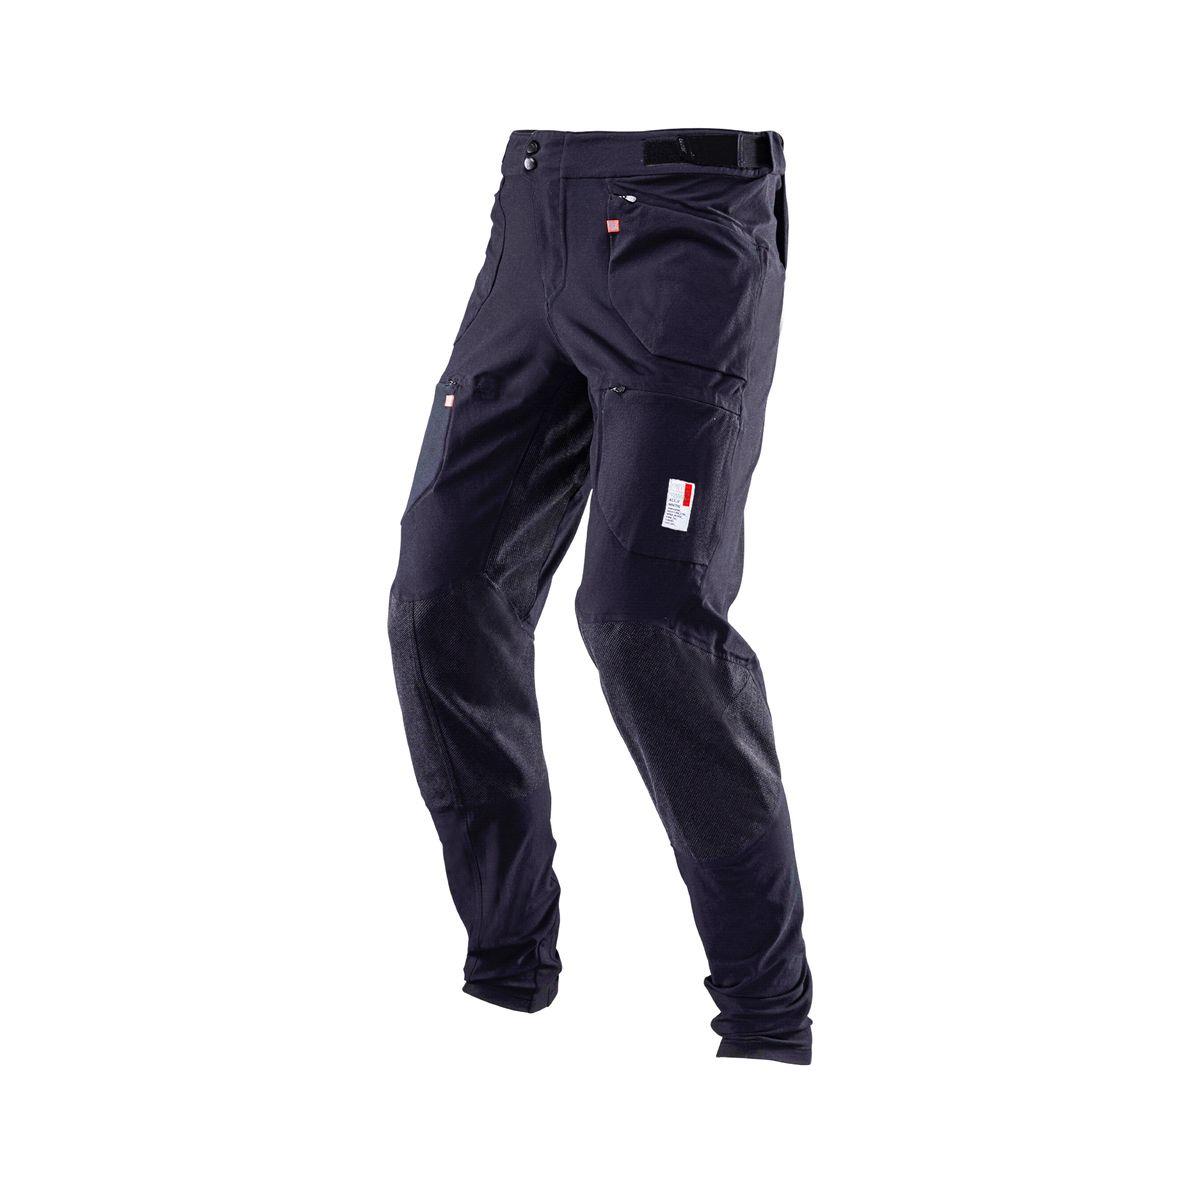 Pantalones MTB Allmtn 4.0 Largos Negro Talla M